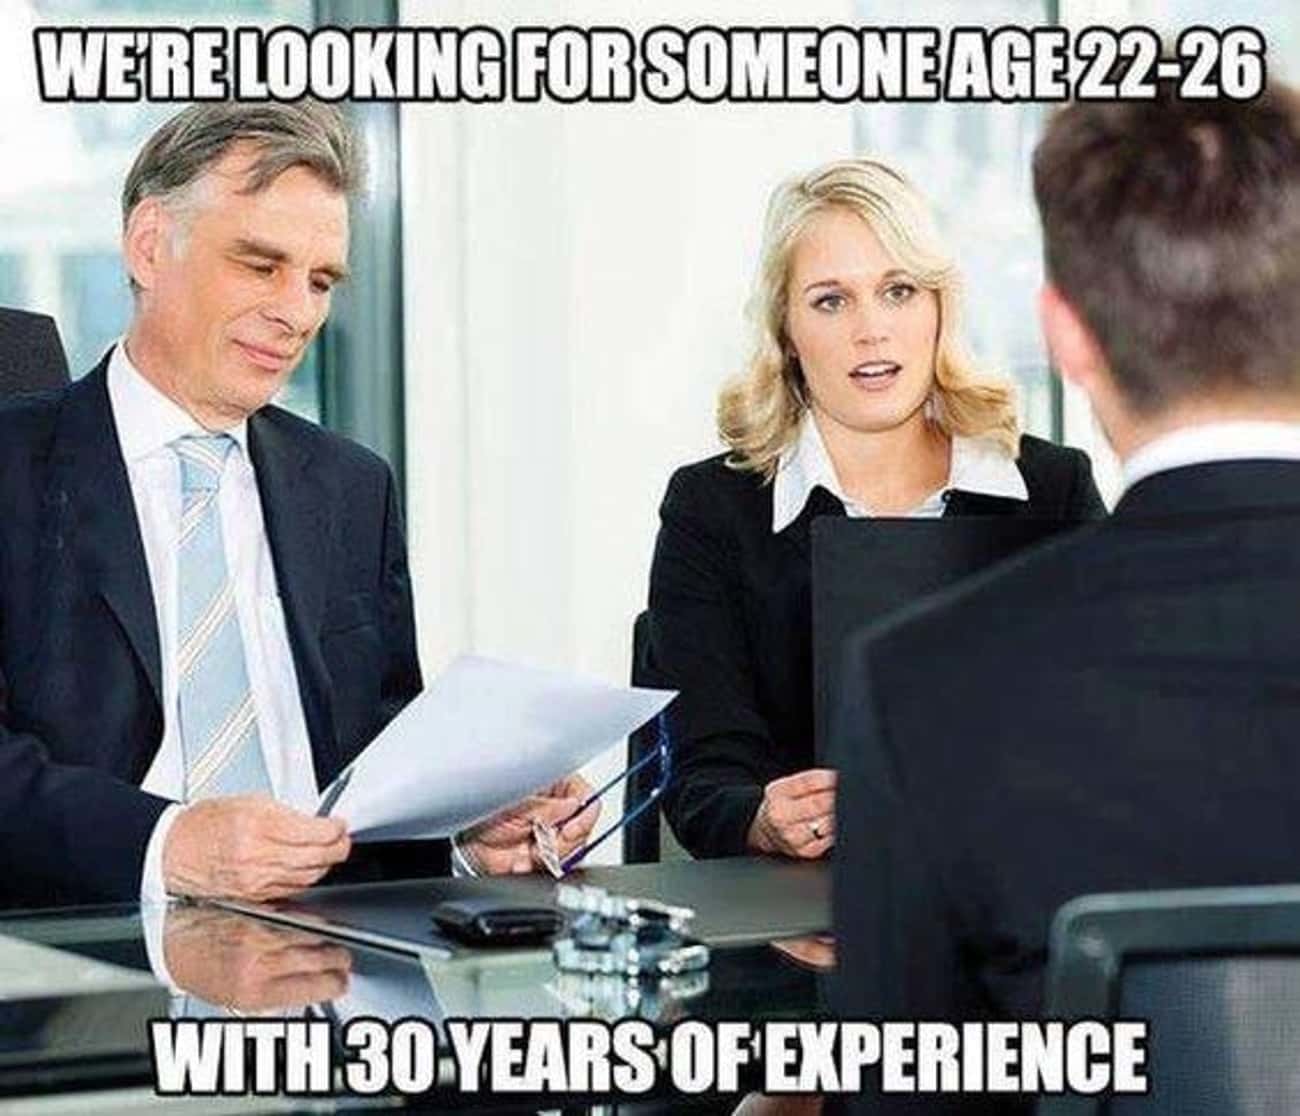 Age qualification